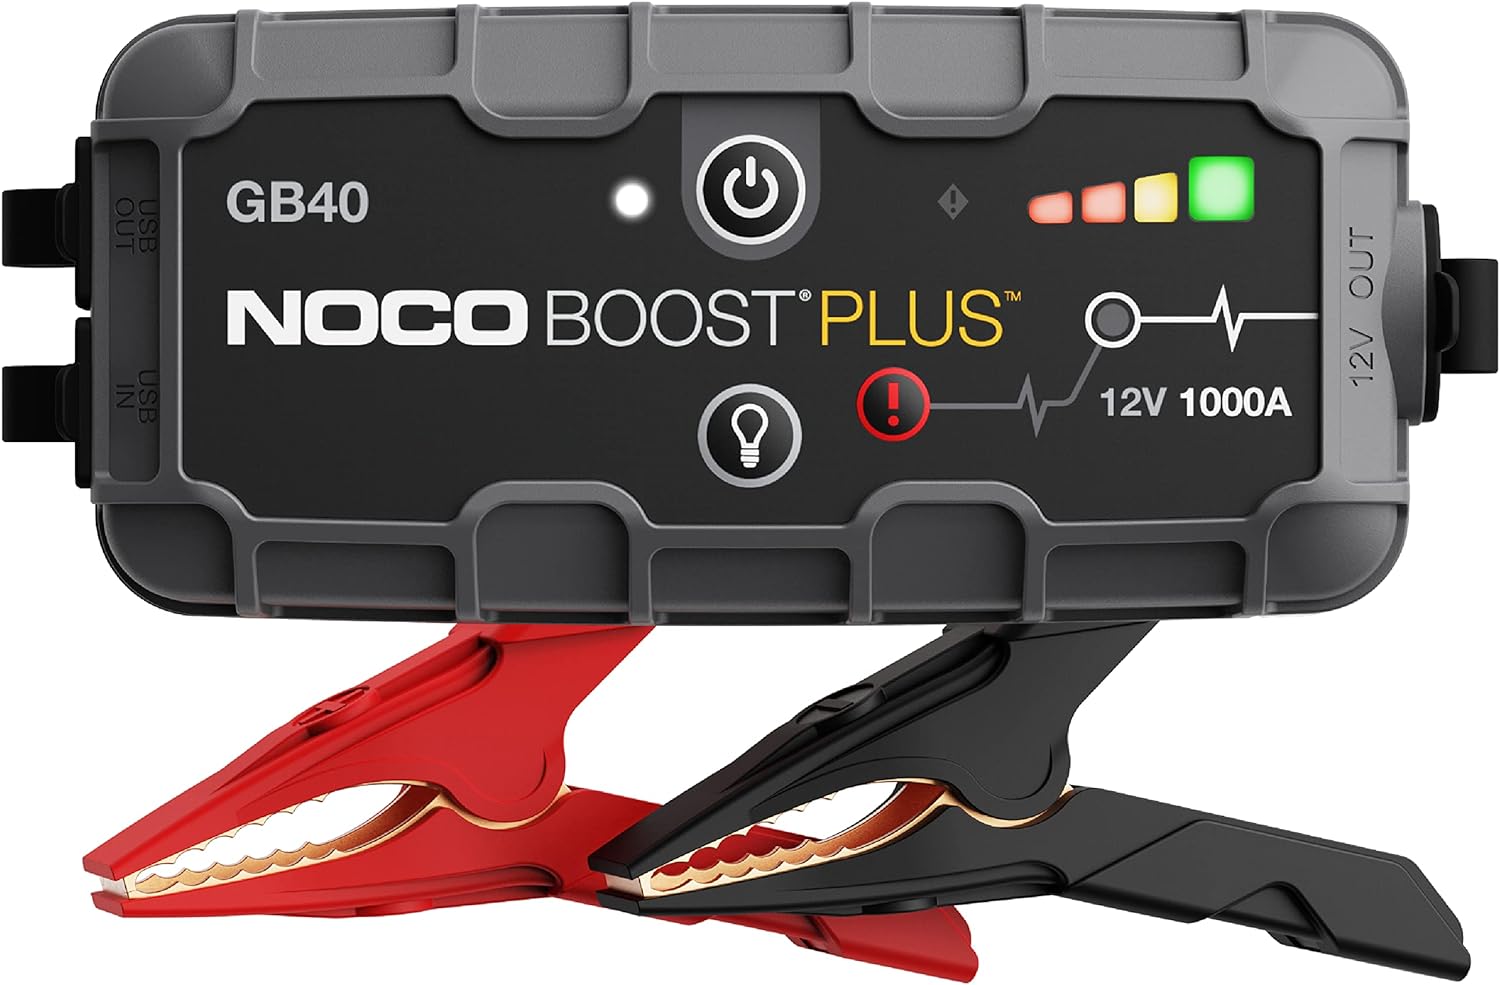 NOCO Boost Plus GB40 1000A UltraSafe Car Jump Starter-7575